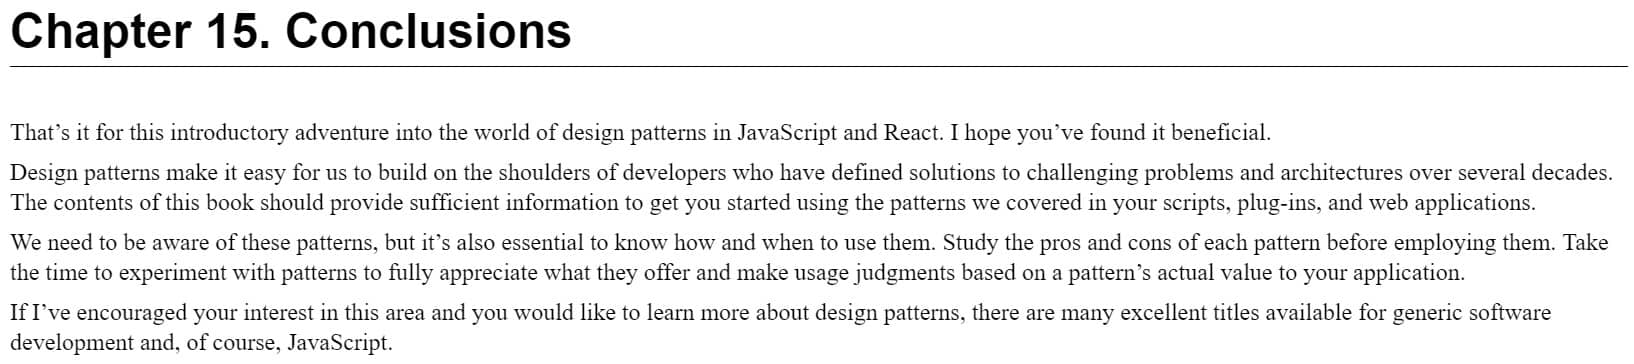 فصل 15 کتاب Learning JavaScript Design Patterns ویرایش دوم